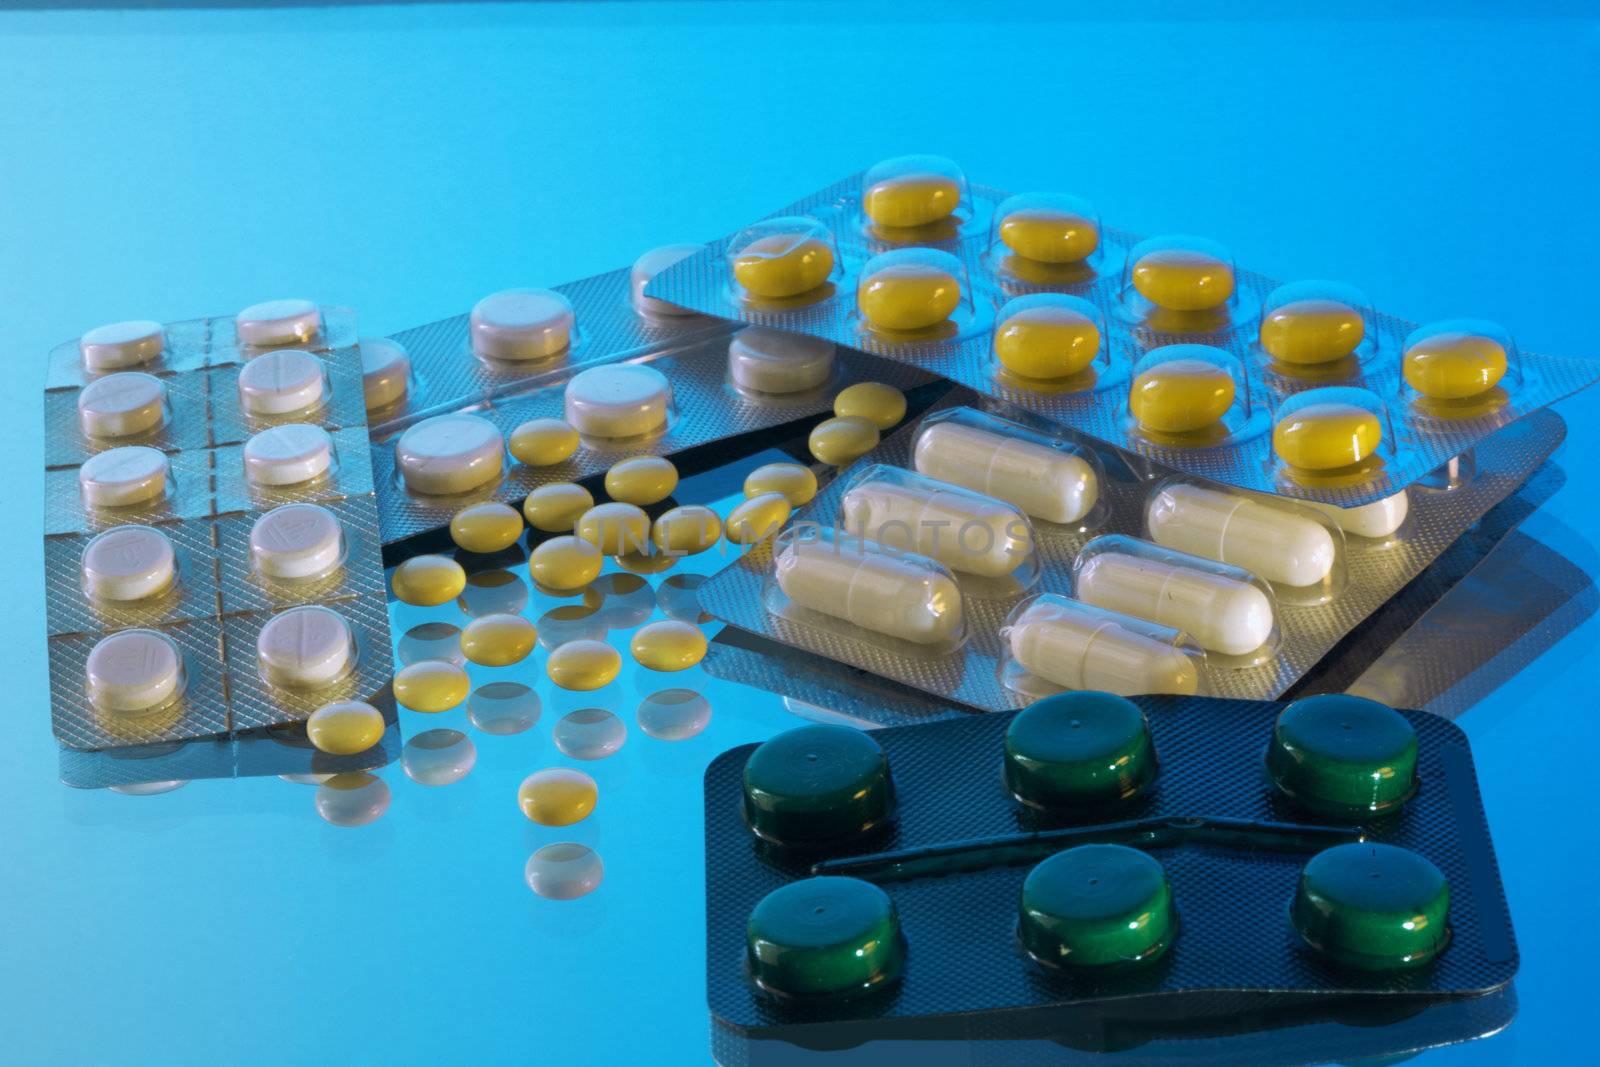 Medicine and tablets by petrkurgan